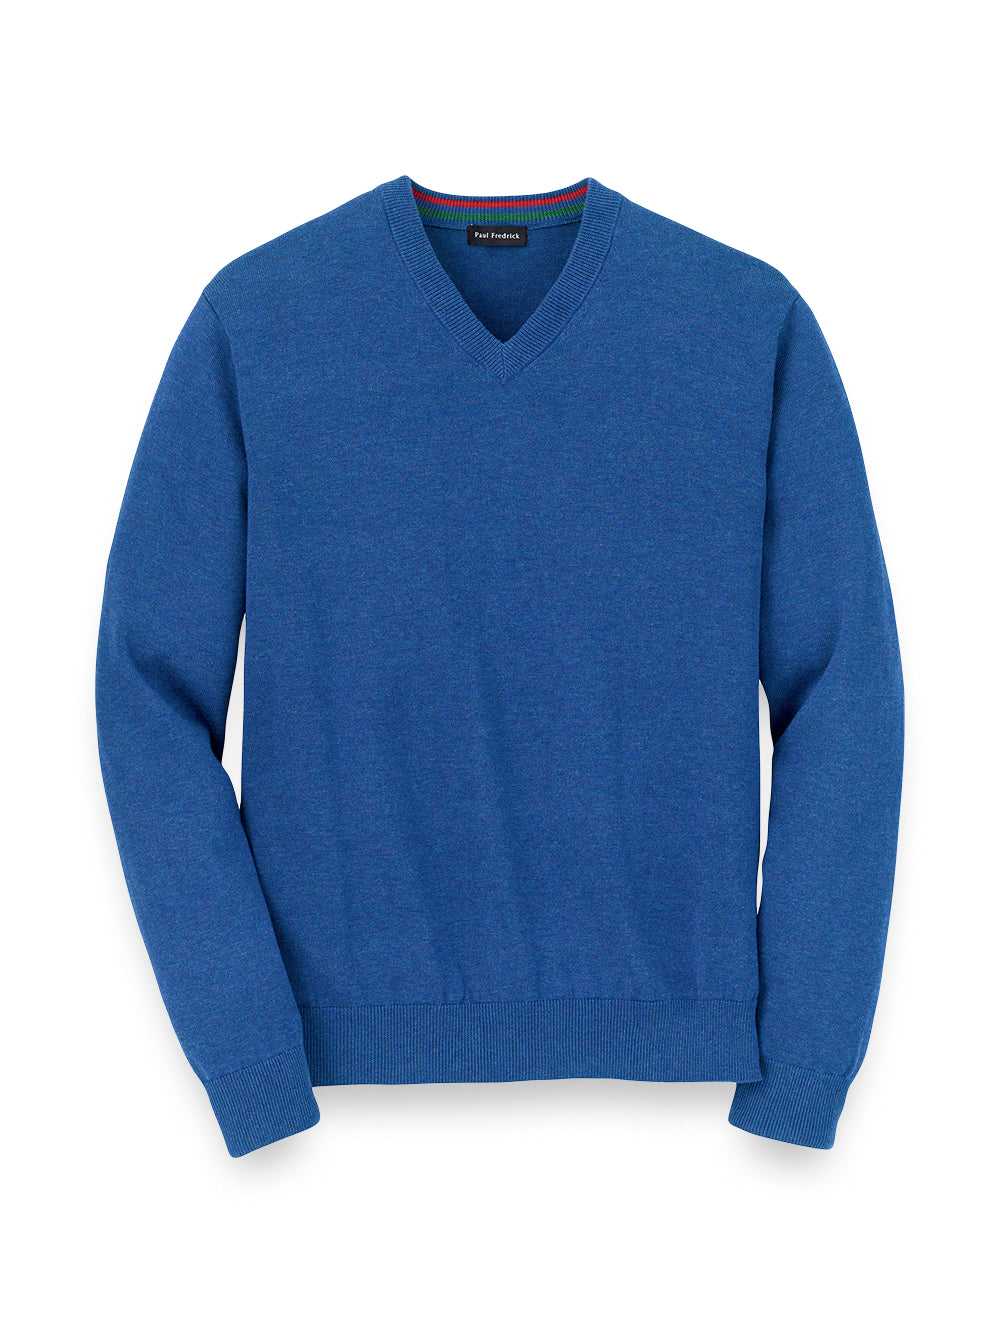 Paul Fredrick, Supima Cotton V-neck Sweater